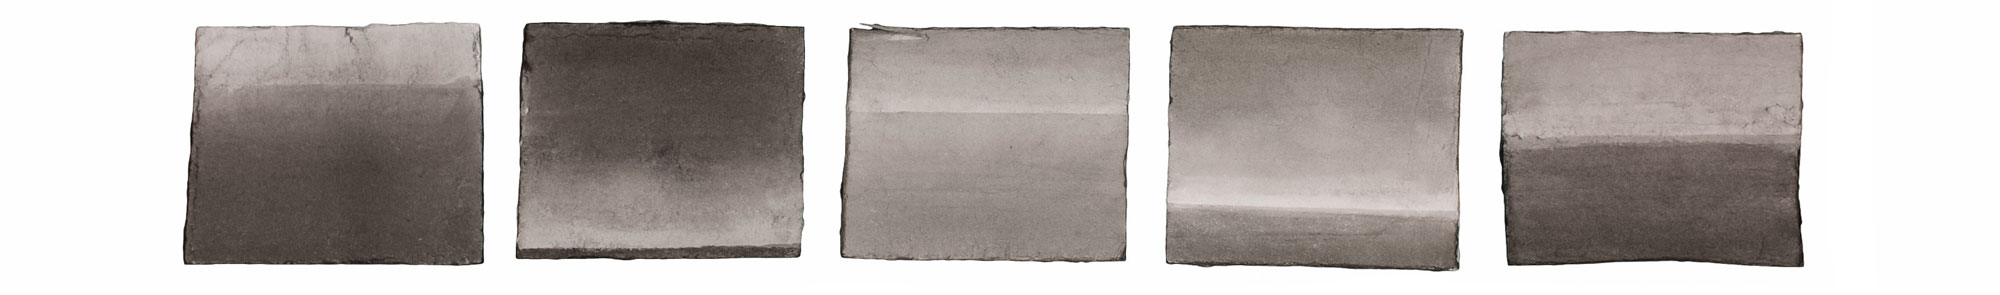   Sem Título, 2017. Nanquim   sobre   papel. Cada 9 x 7,5 cm | 51 x 7,5 cm (Conj.&nbsp;de 5 imgs.)    Untitled, 2017. Ink on paper. Each 9 x 7,5 cm | 51 x 7,5 cm (Set of 5 imgs.)  